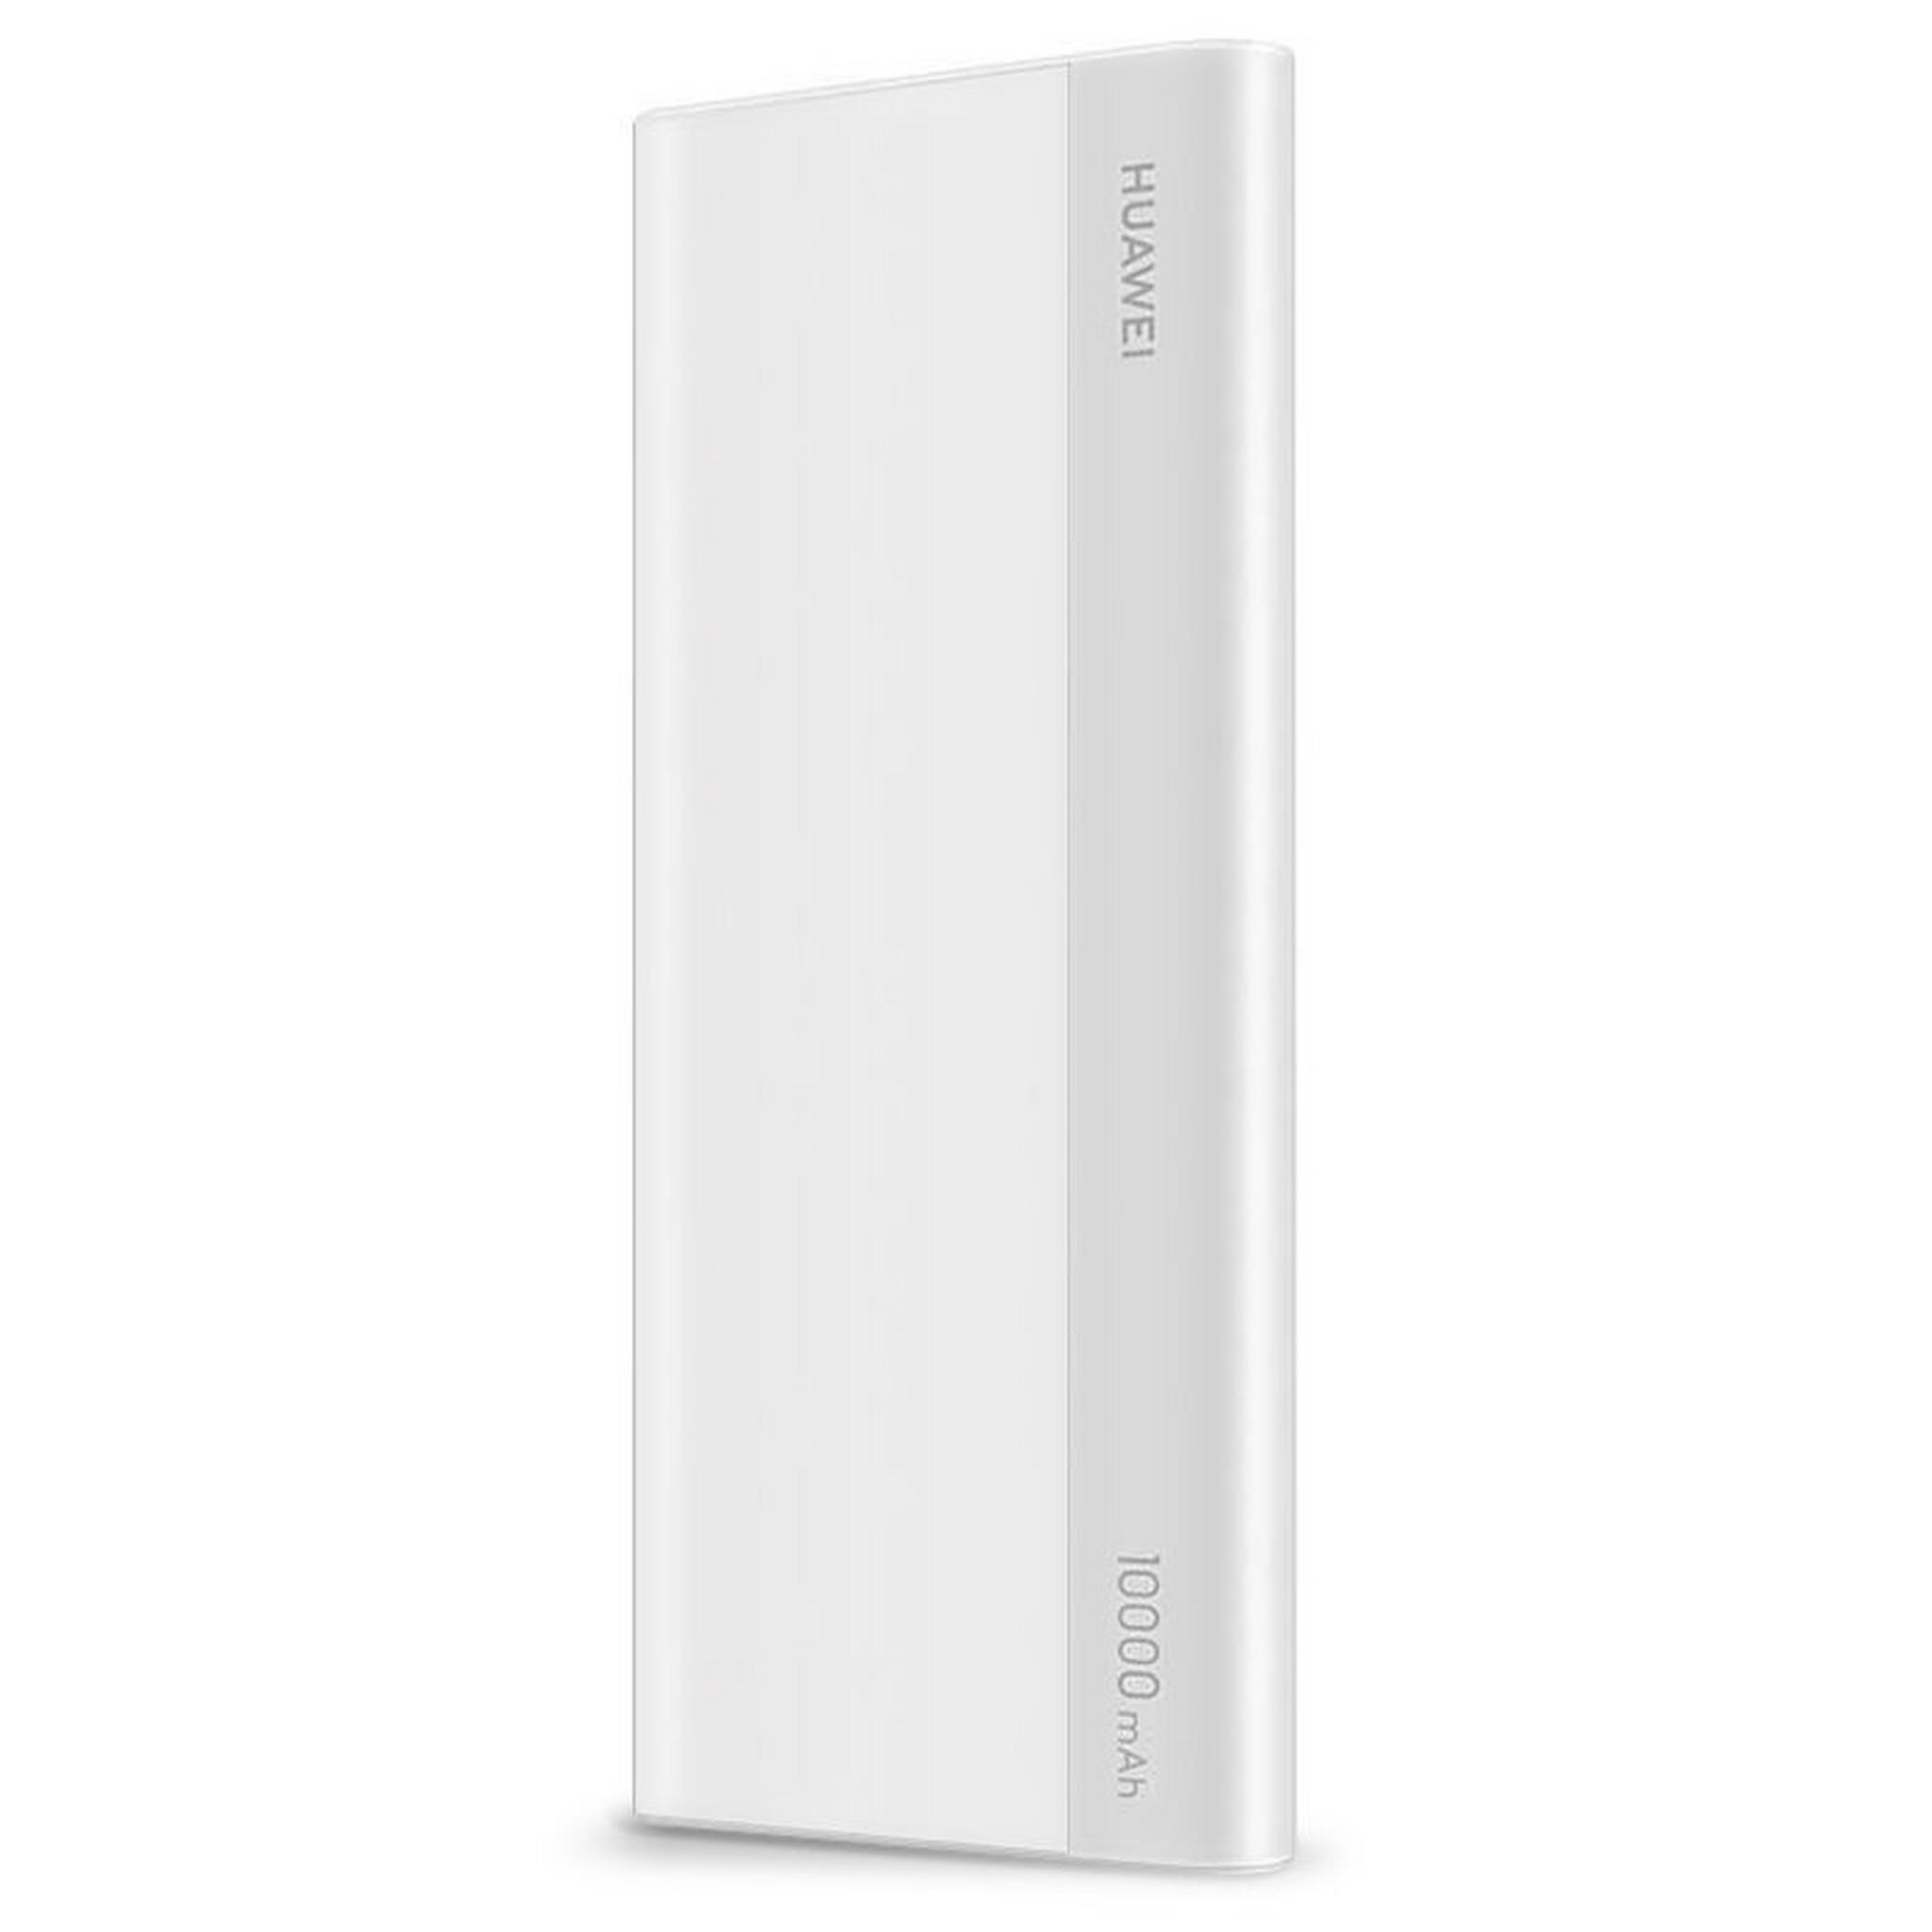 Huawei 100000 mAh SuperCharge Power Bank - White